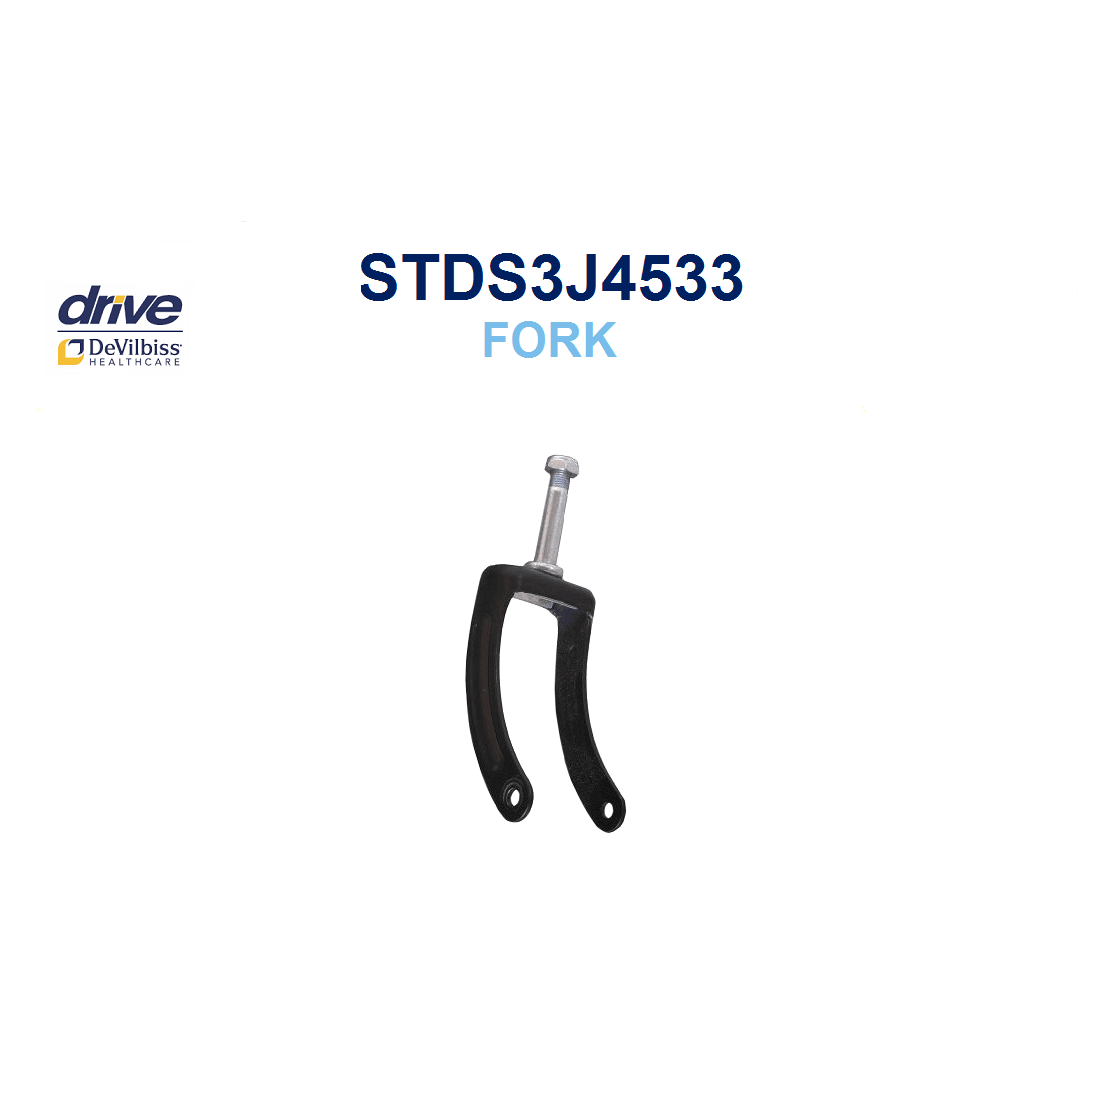 Drive Medical Standard Replacement Caster Fork, STDS3J4533 each